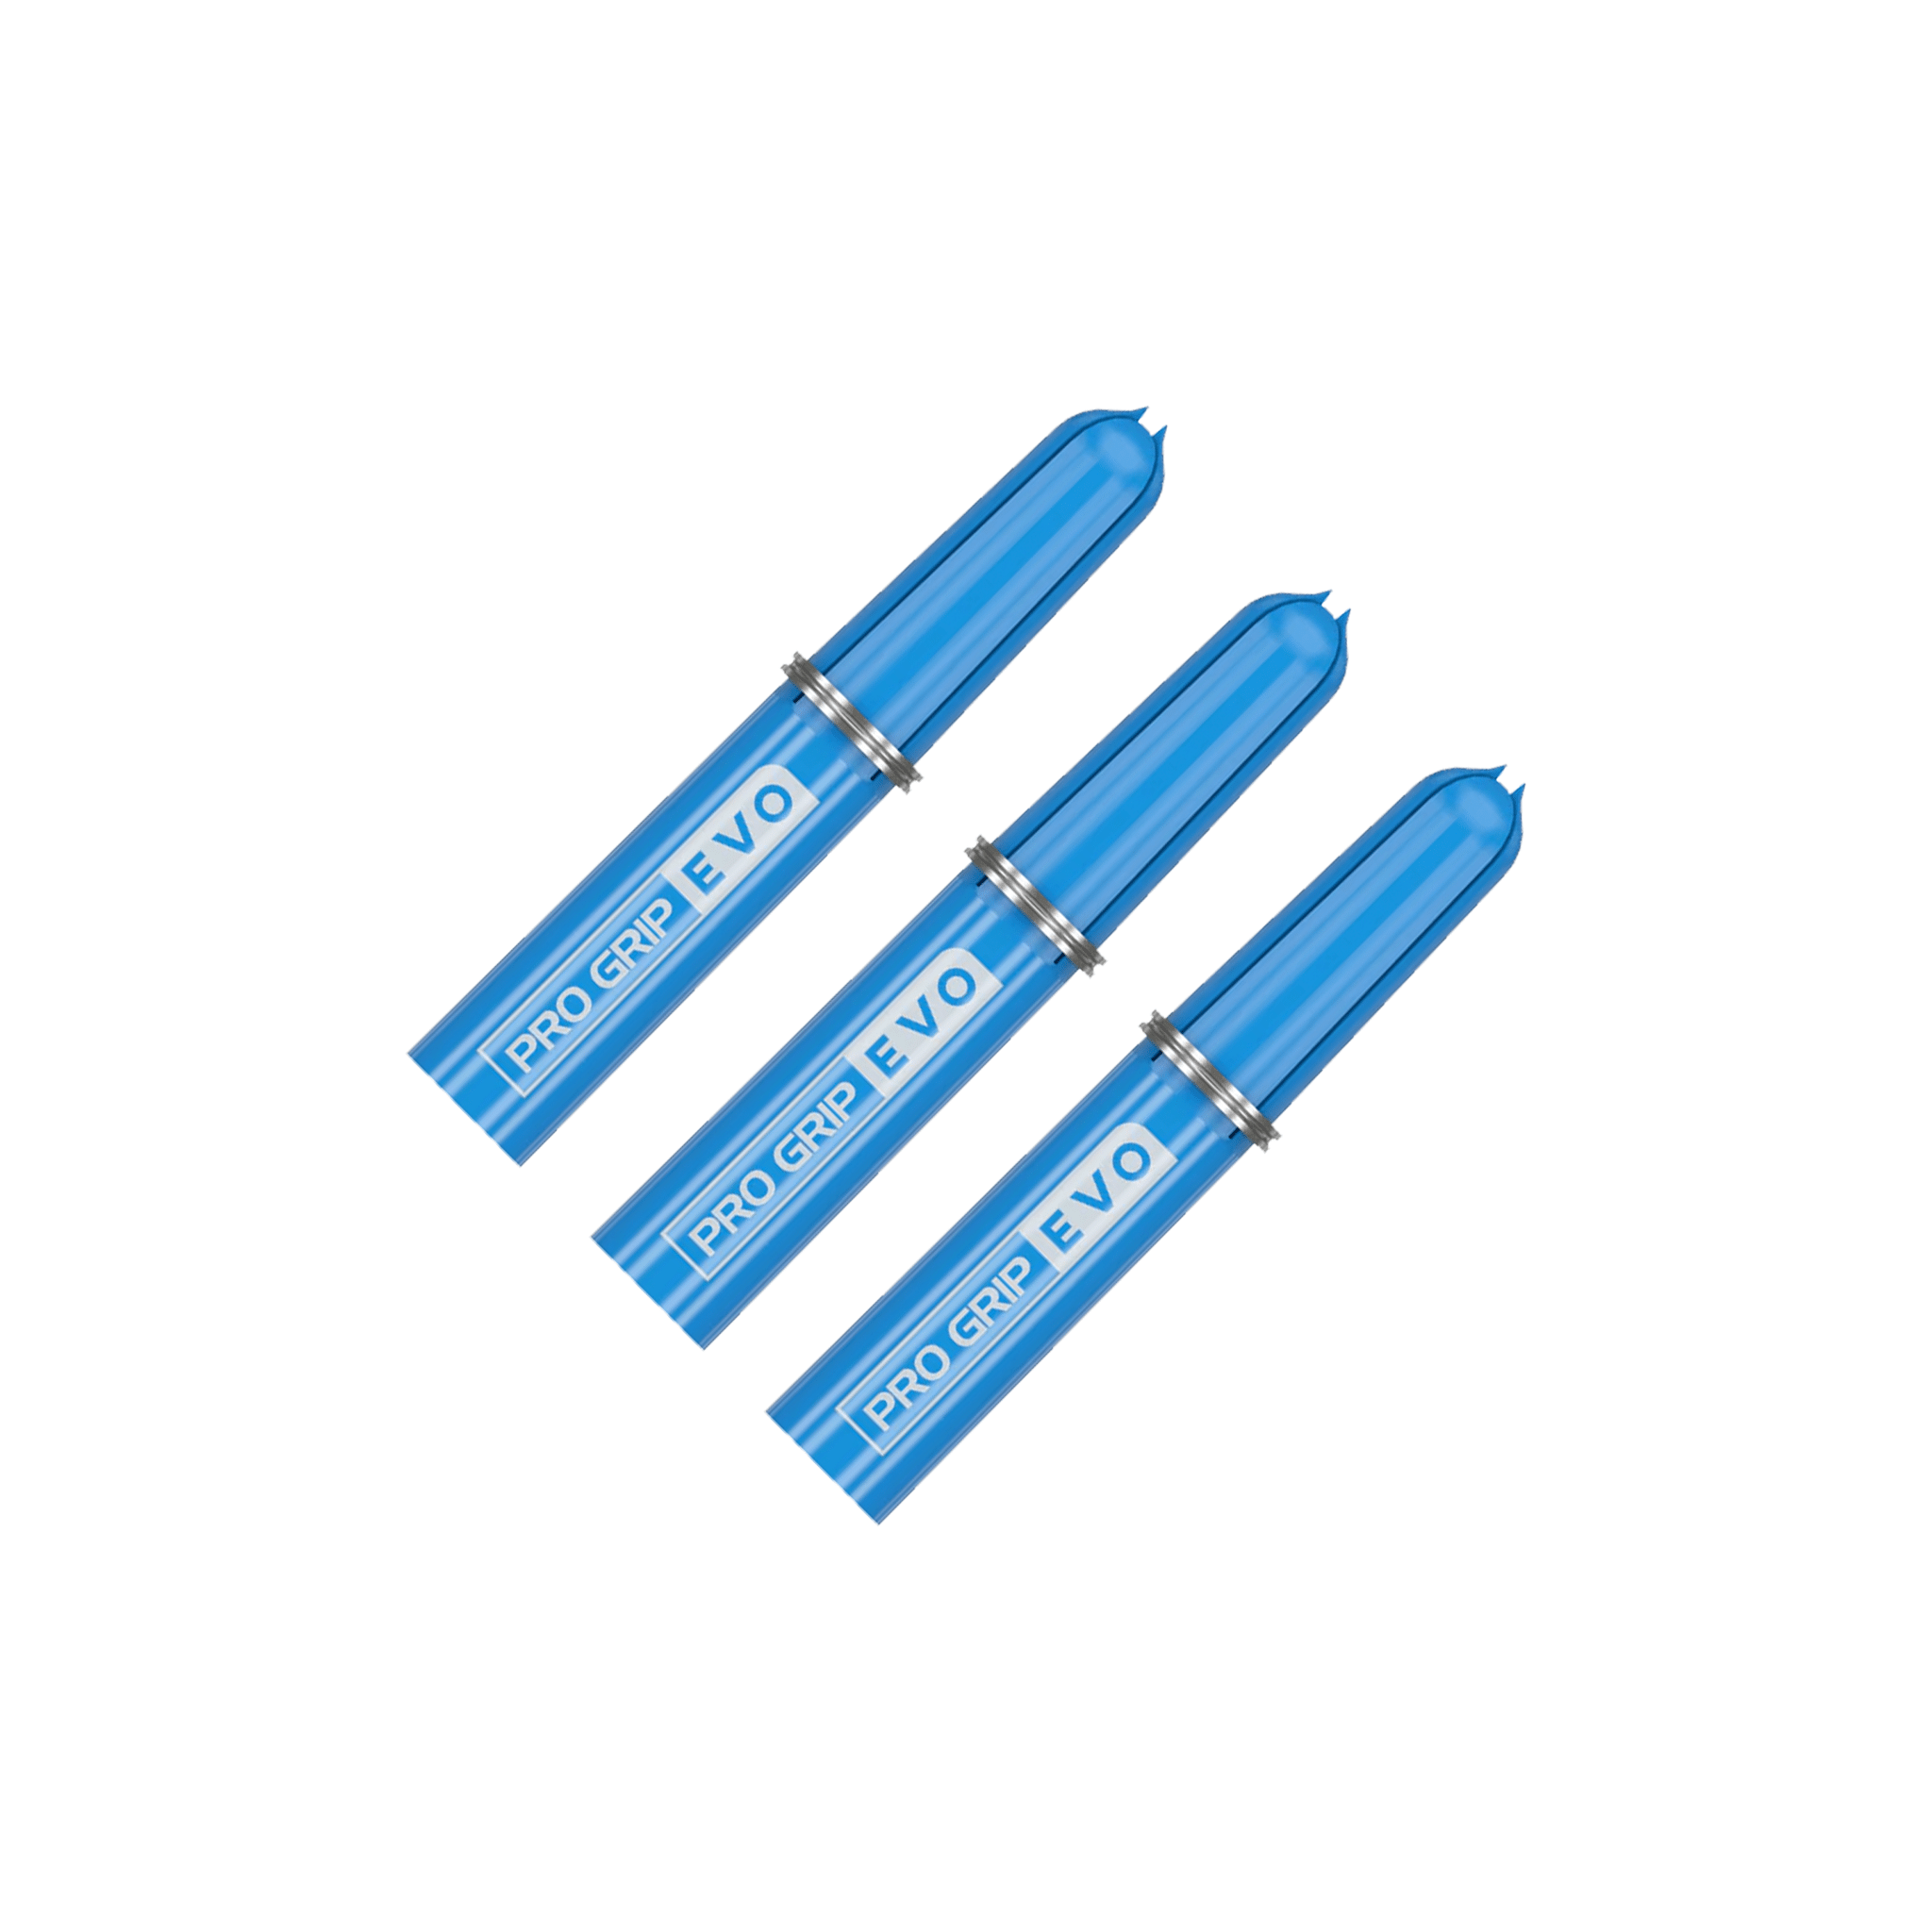 Target Pro Grip Evo - Aluminium / Nylon Dart Shafts Blue / Spare Tops Shafts